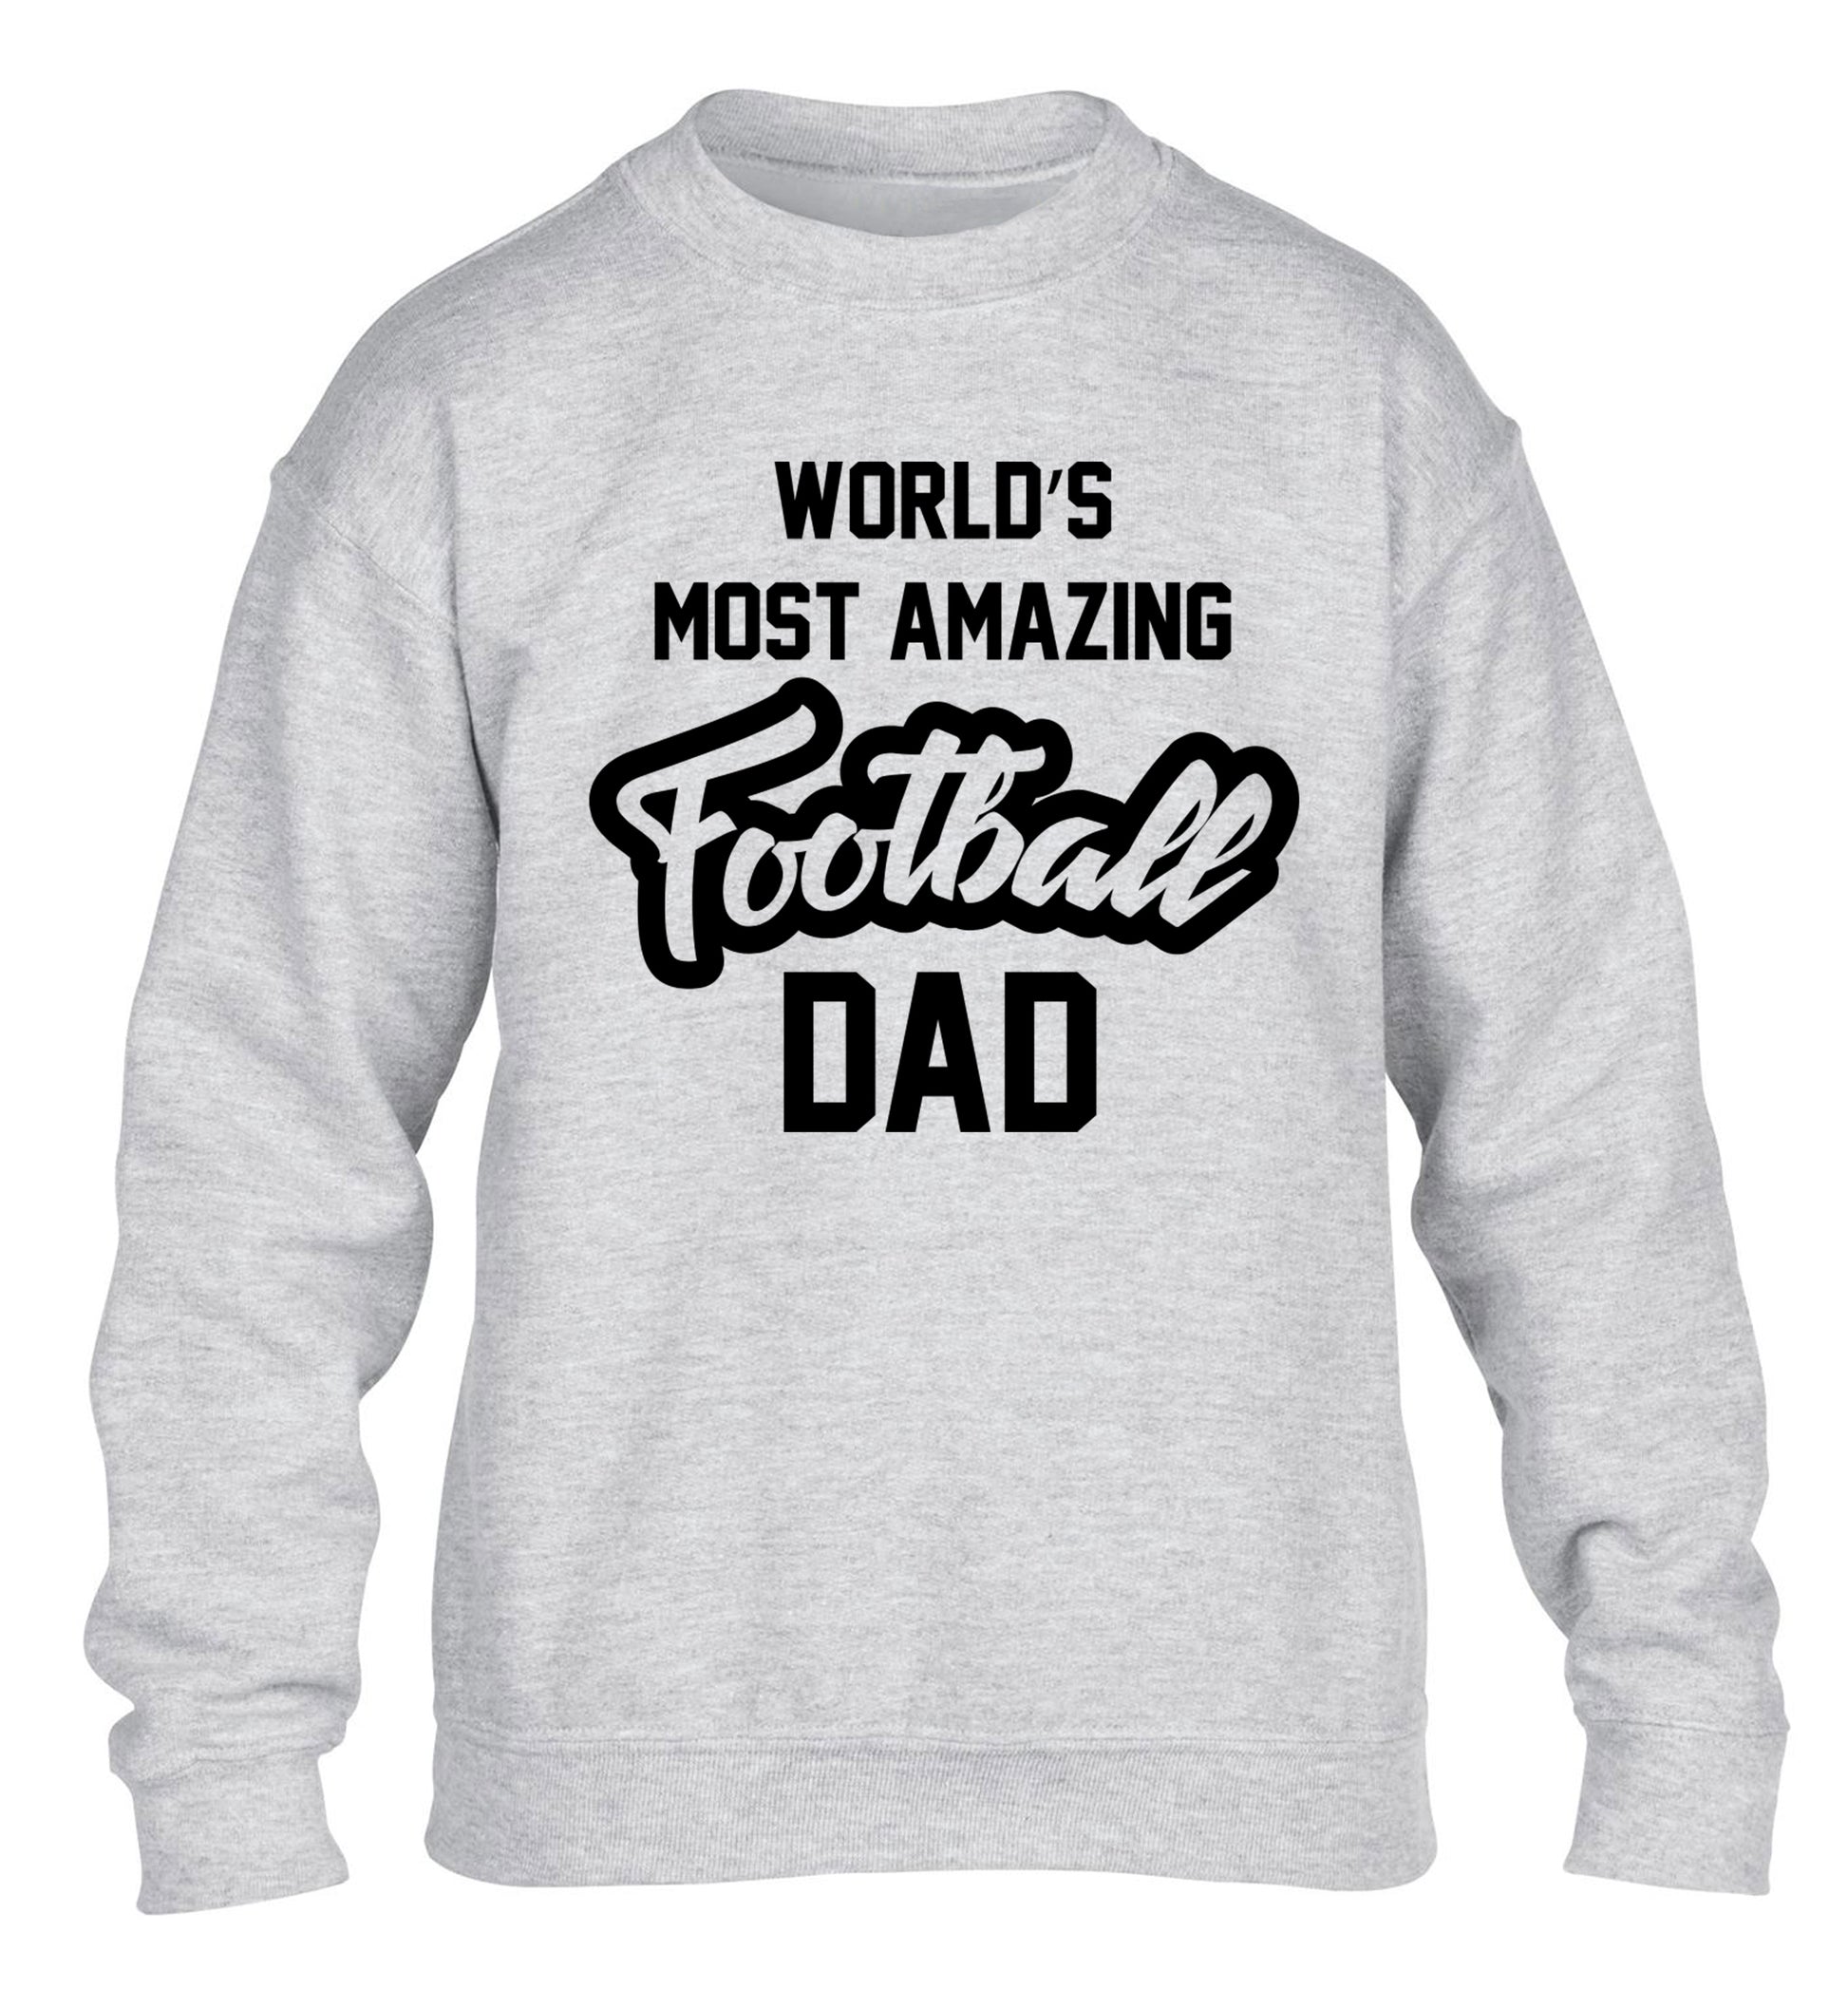 Worlds most amazing football dad children's grey sweater 12-14 Years